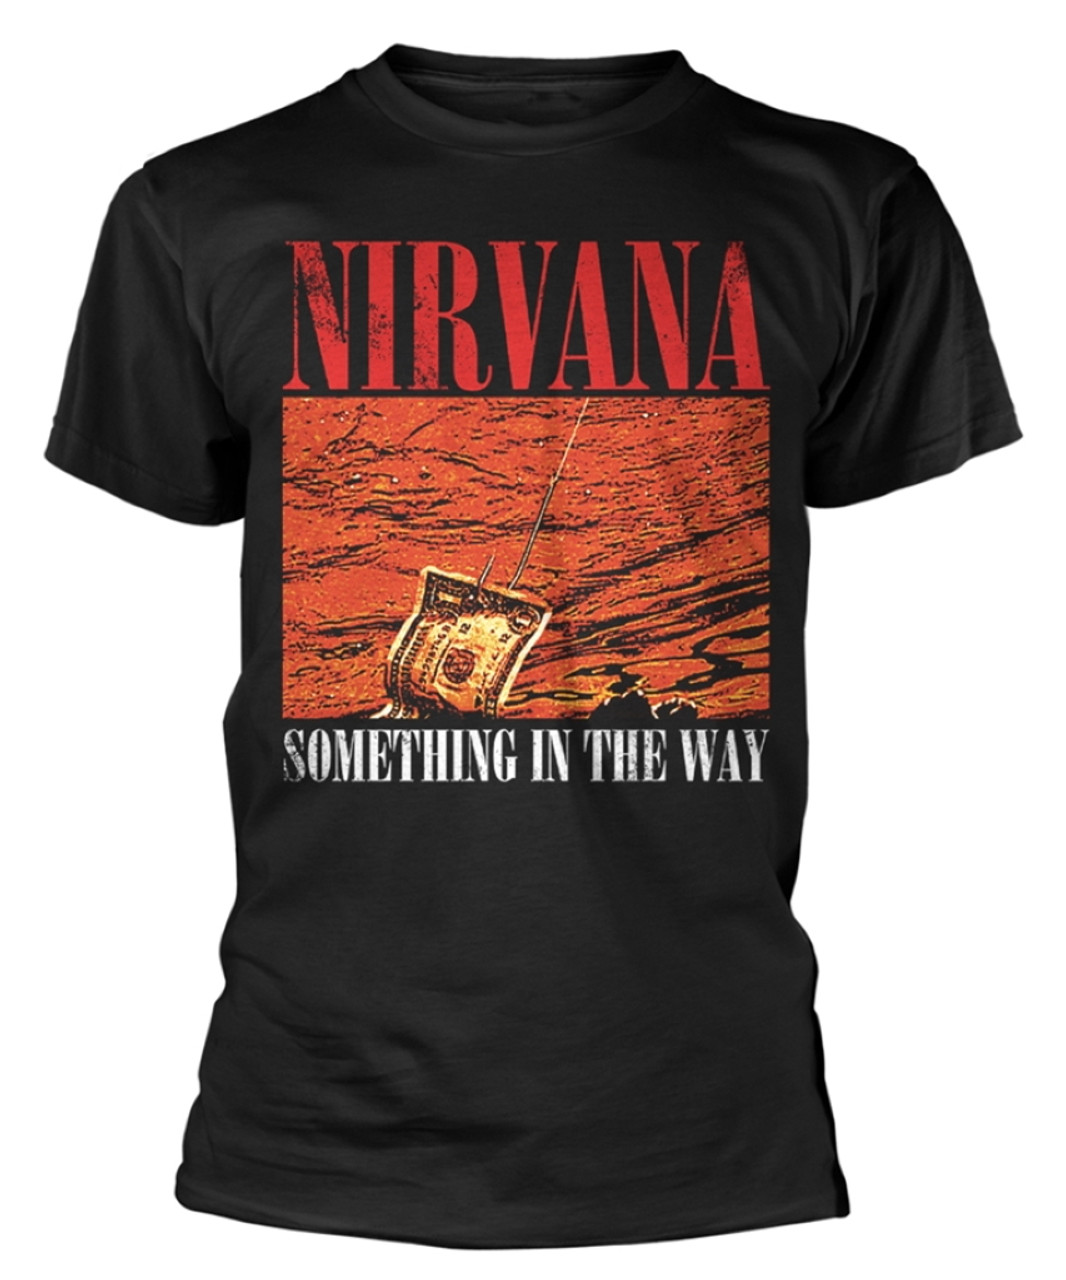 Nirvana 'Something In The Way' (Black) T-Shirt